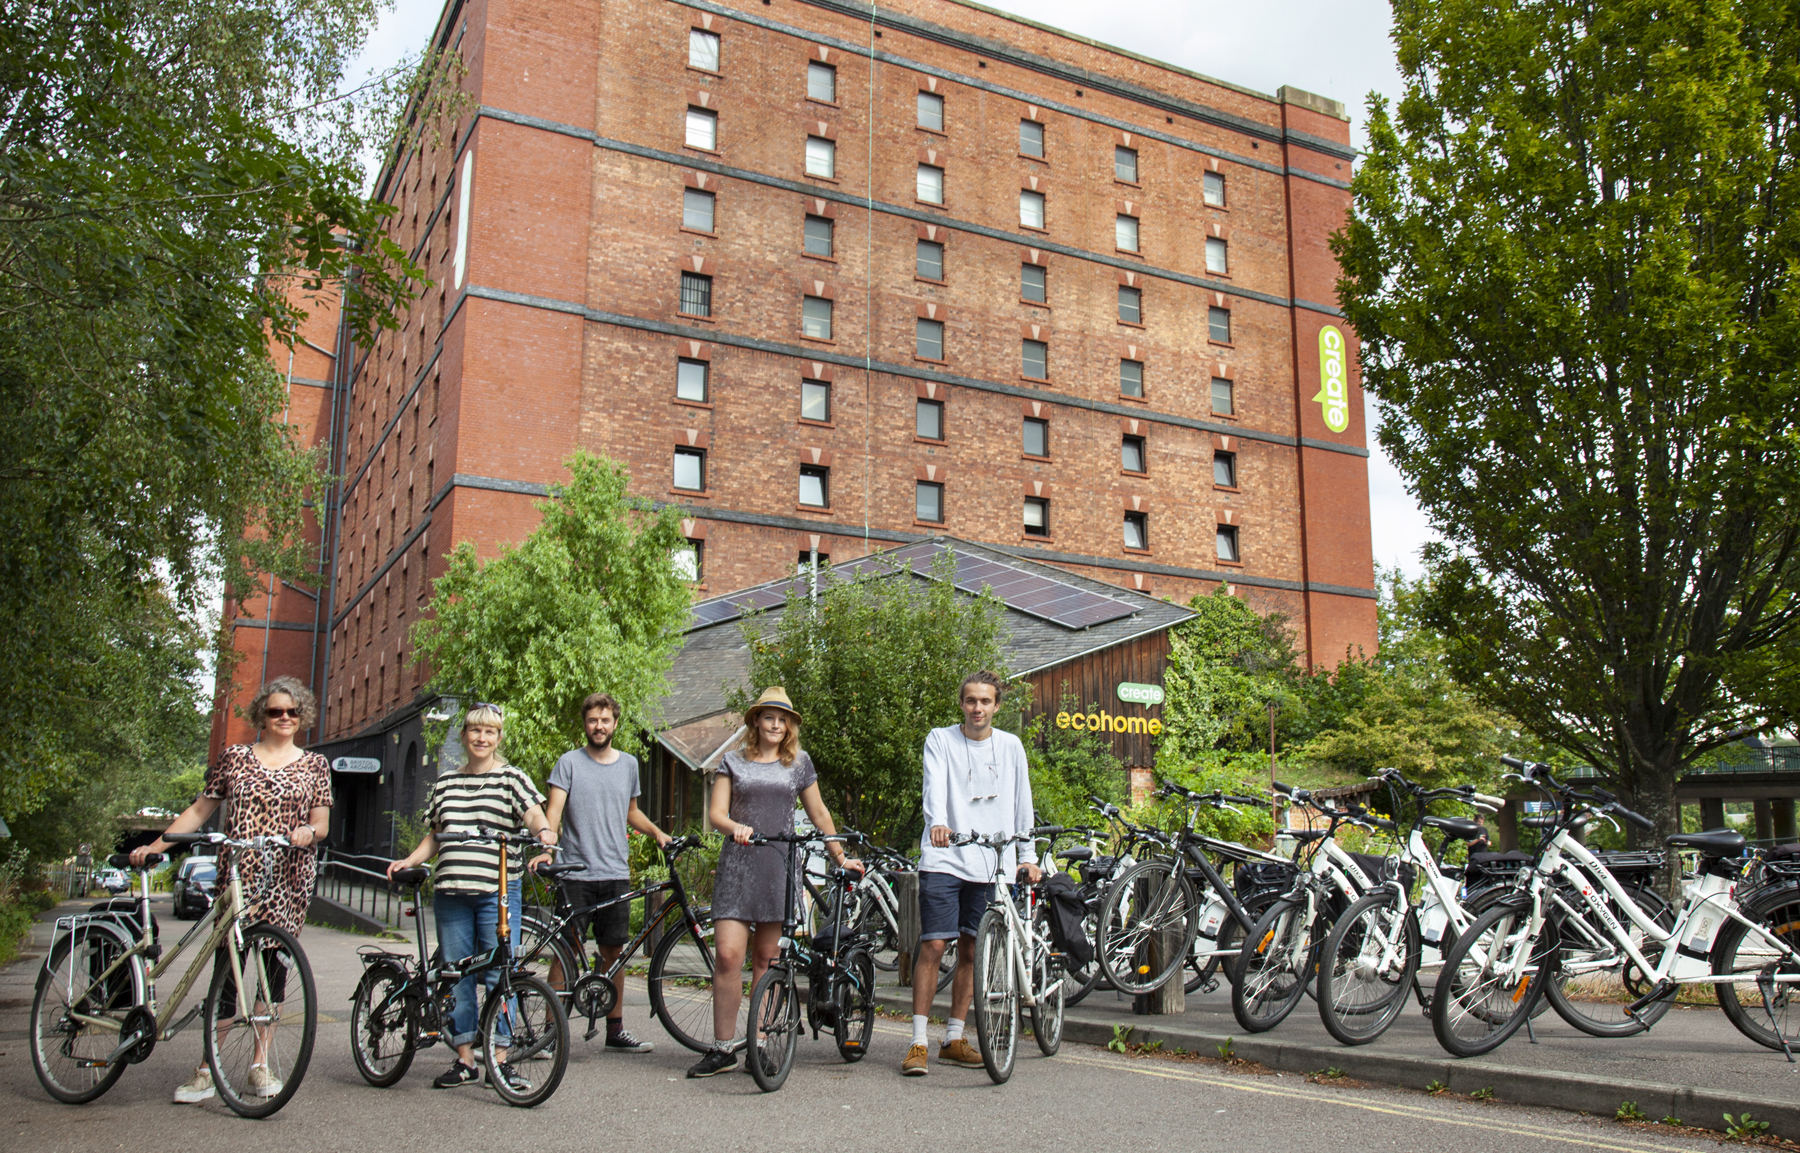 Loan bike scheme promotional photo outside Create Centre Bristol